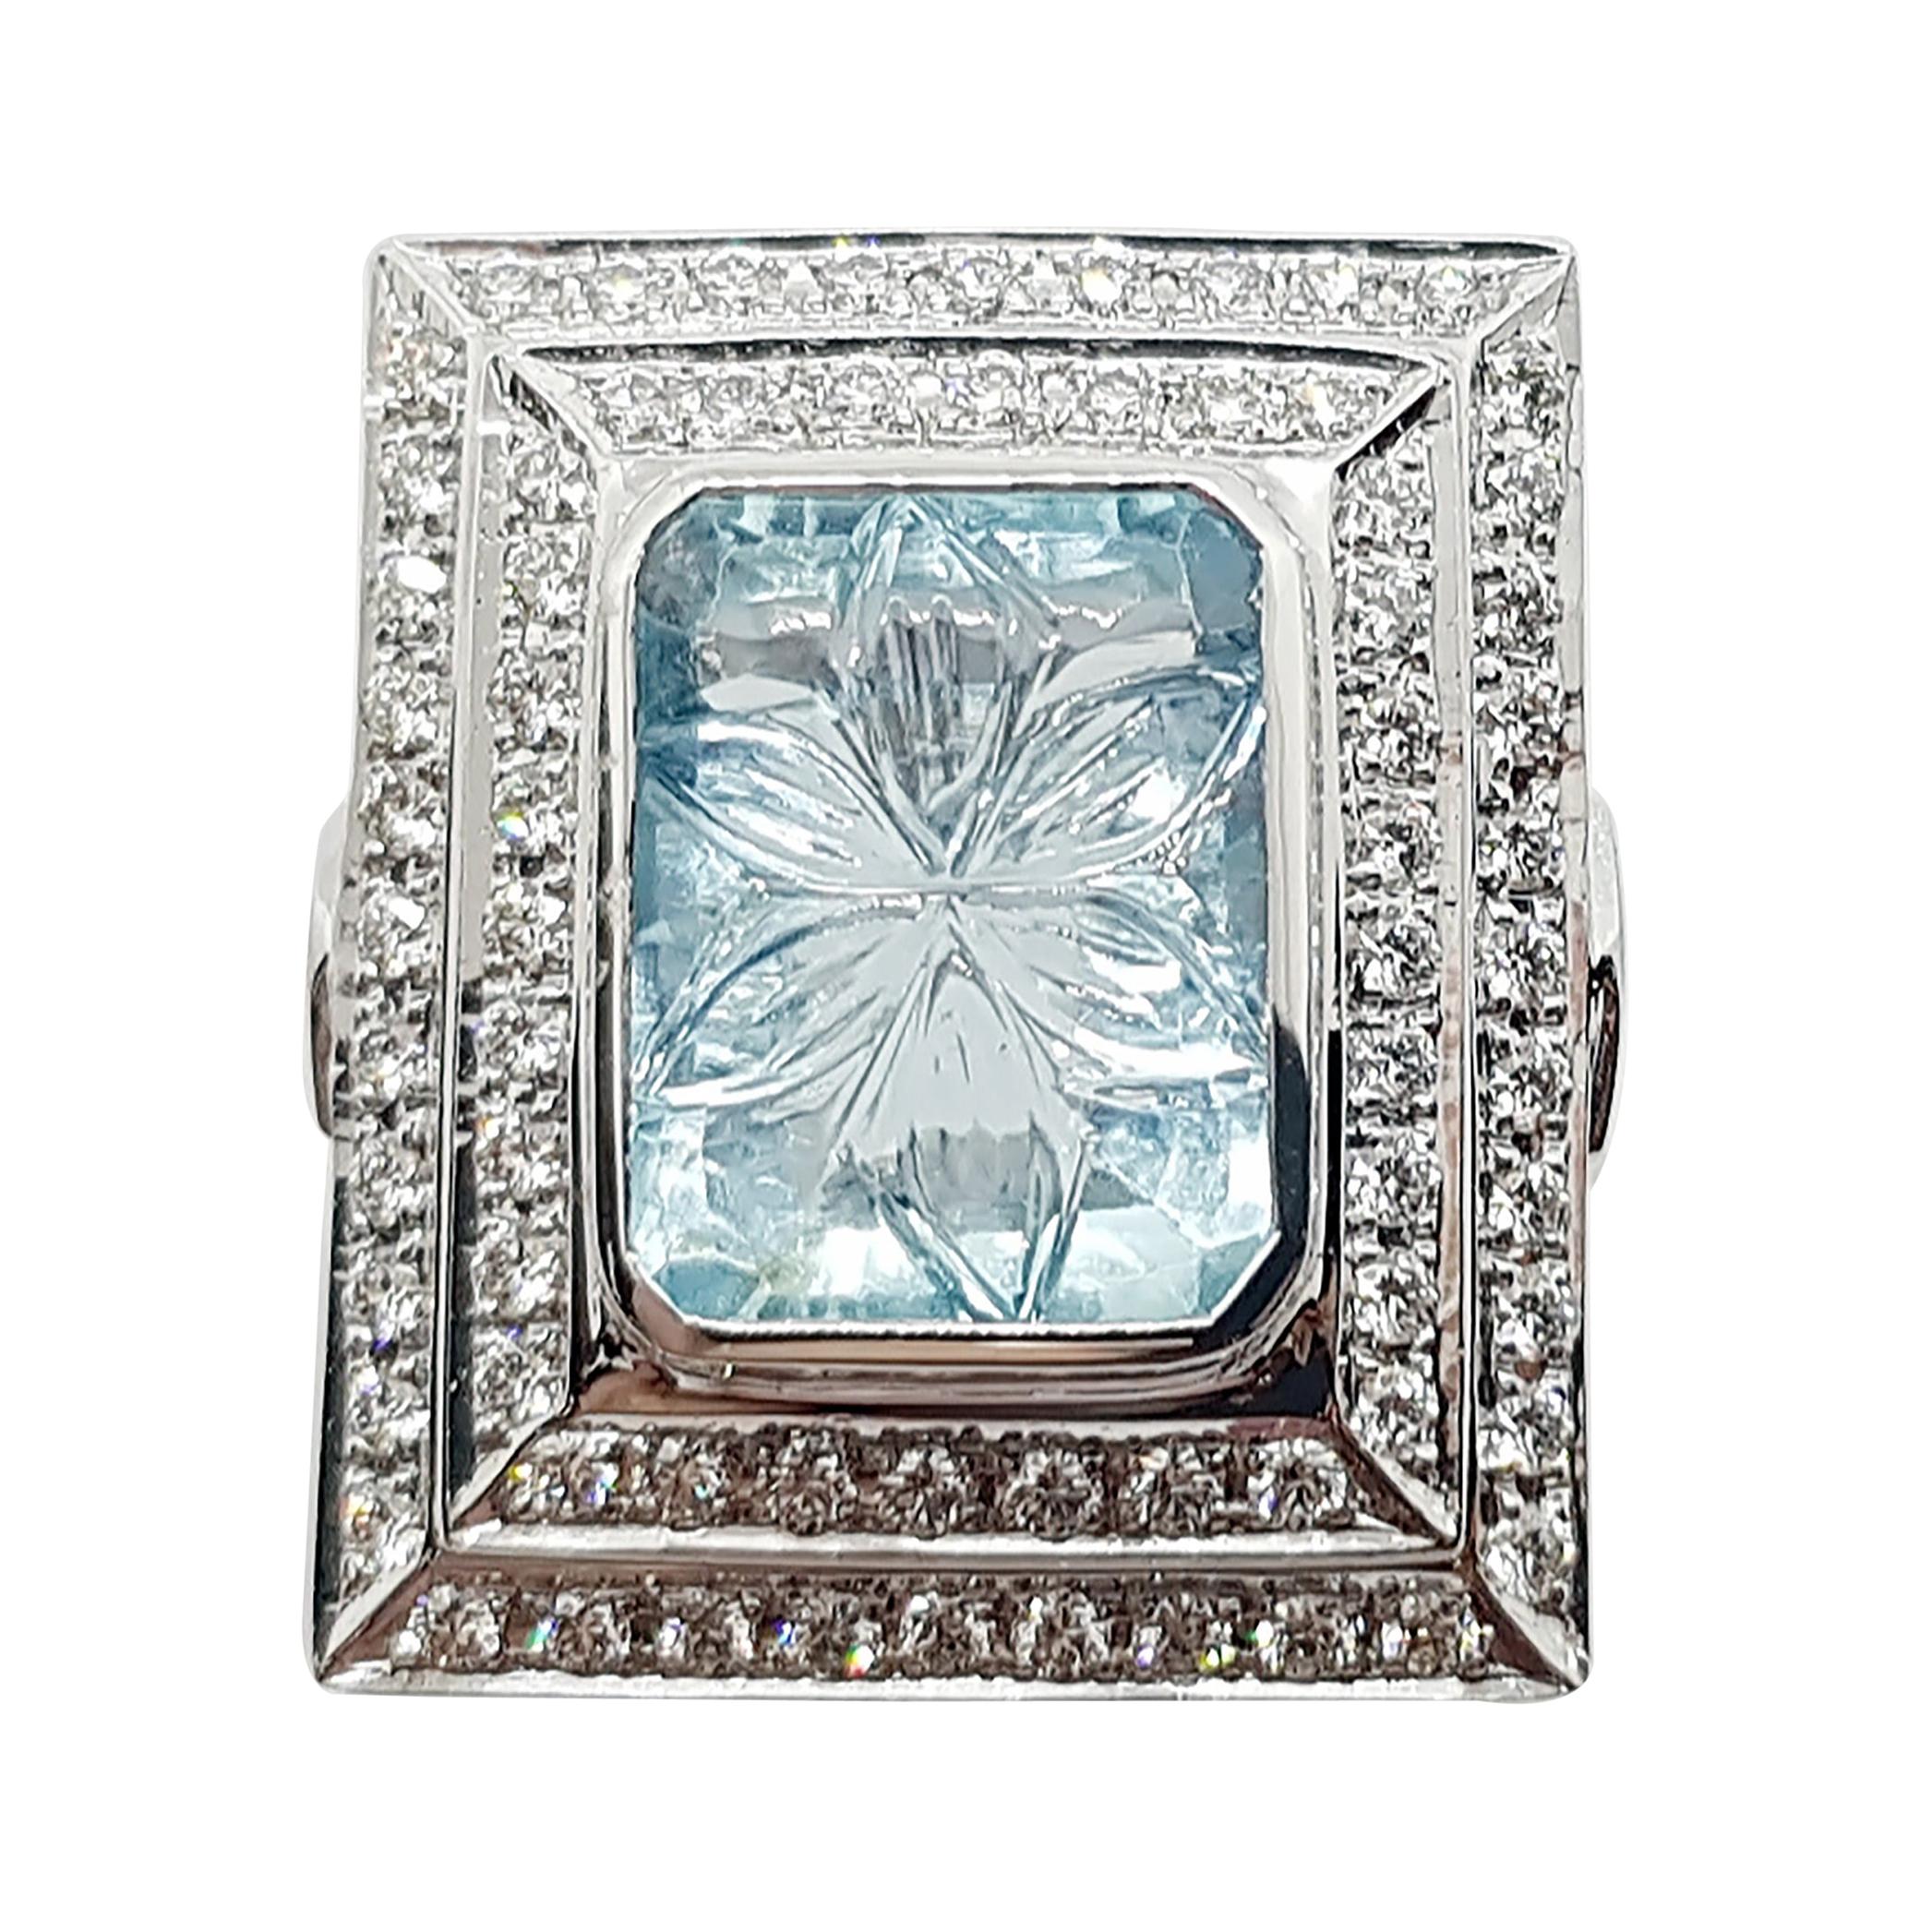 Carved Aquamarine with Diamond Ring Set in 18 Karat White Gold Settings